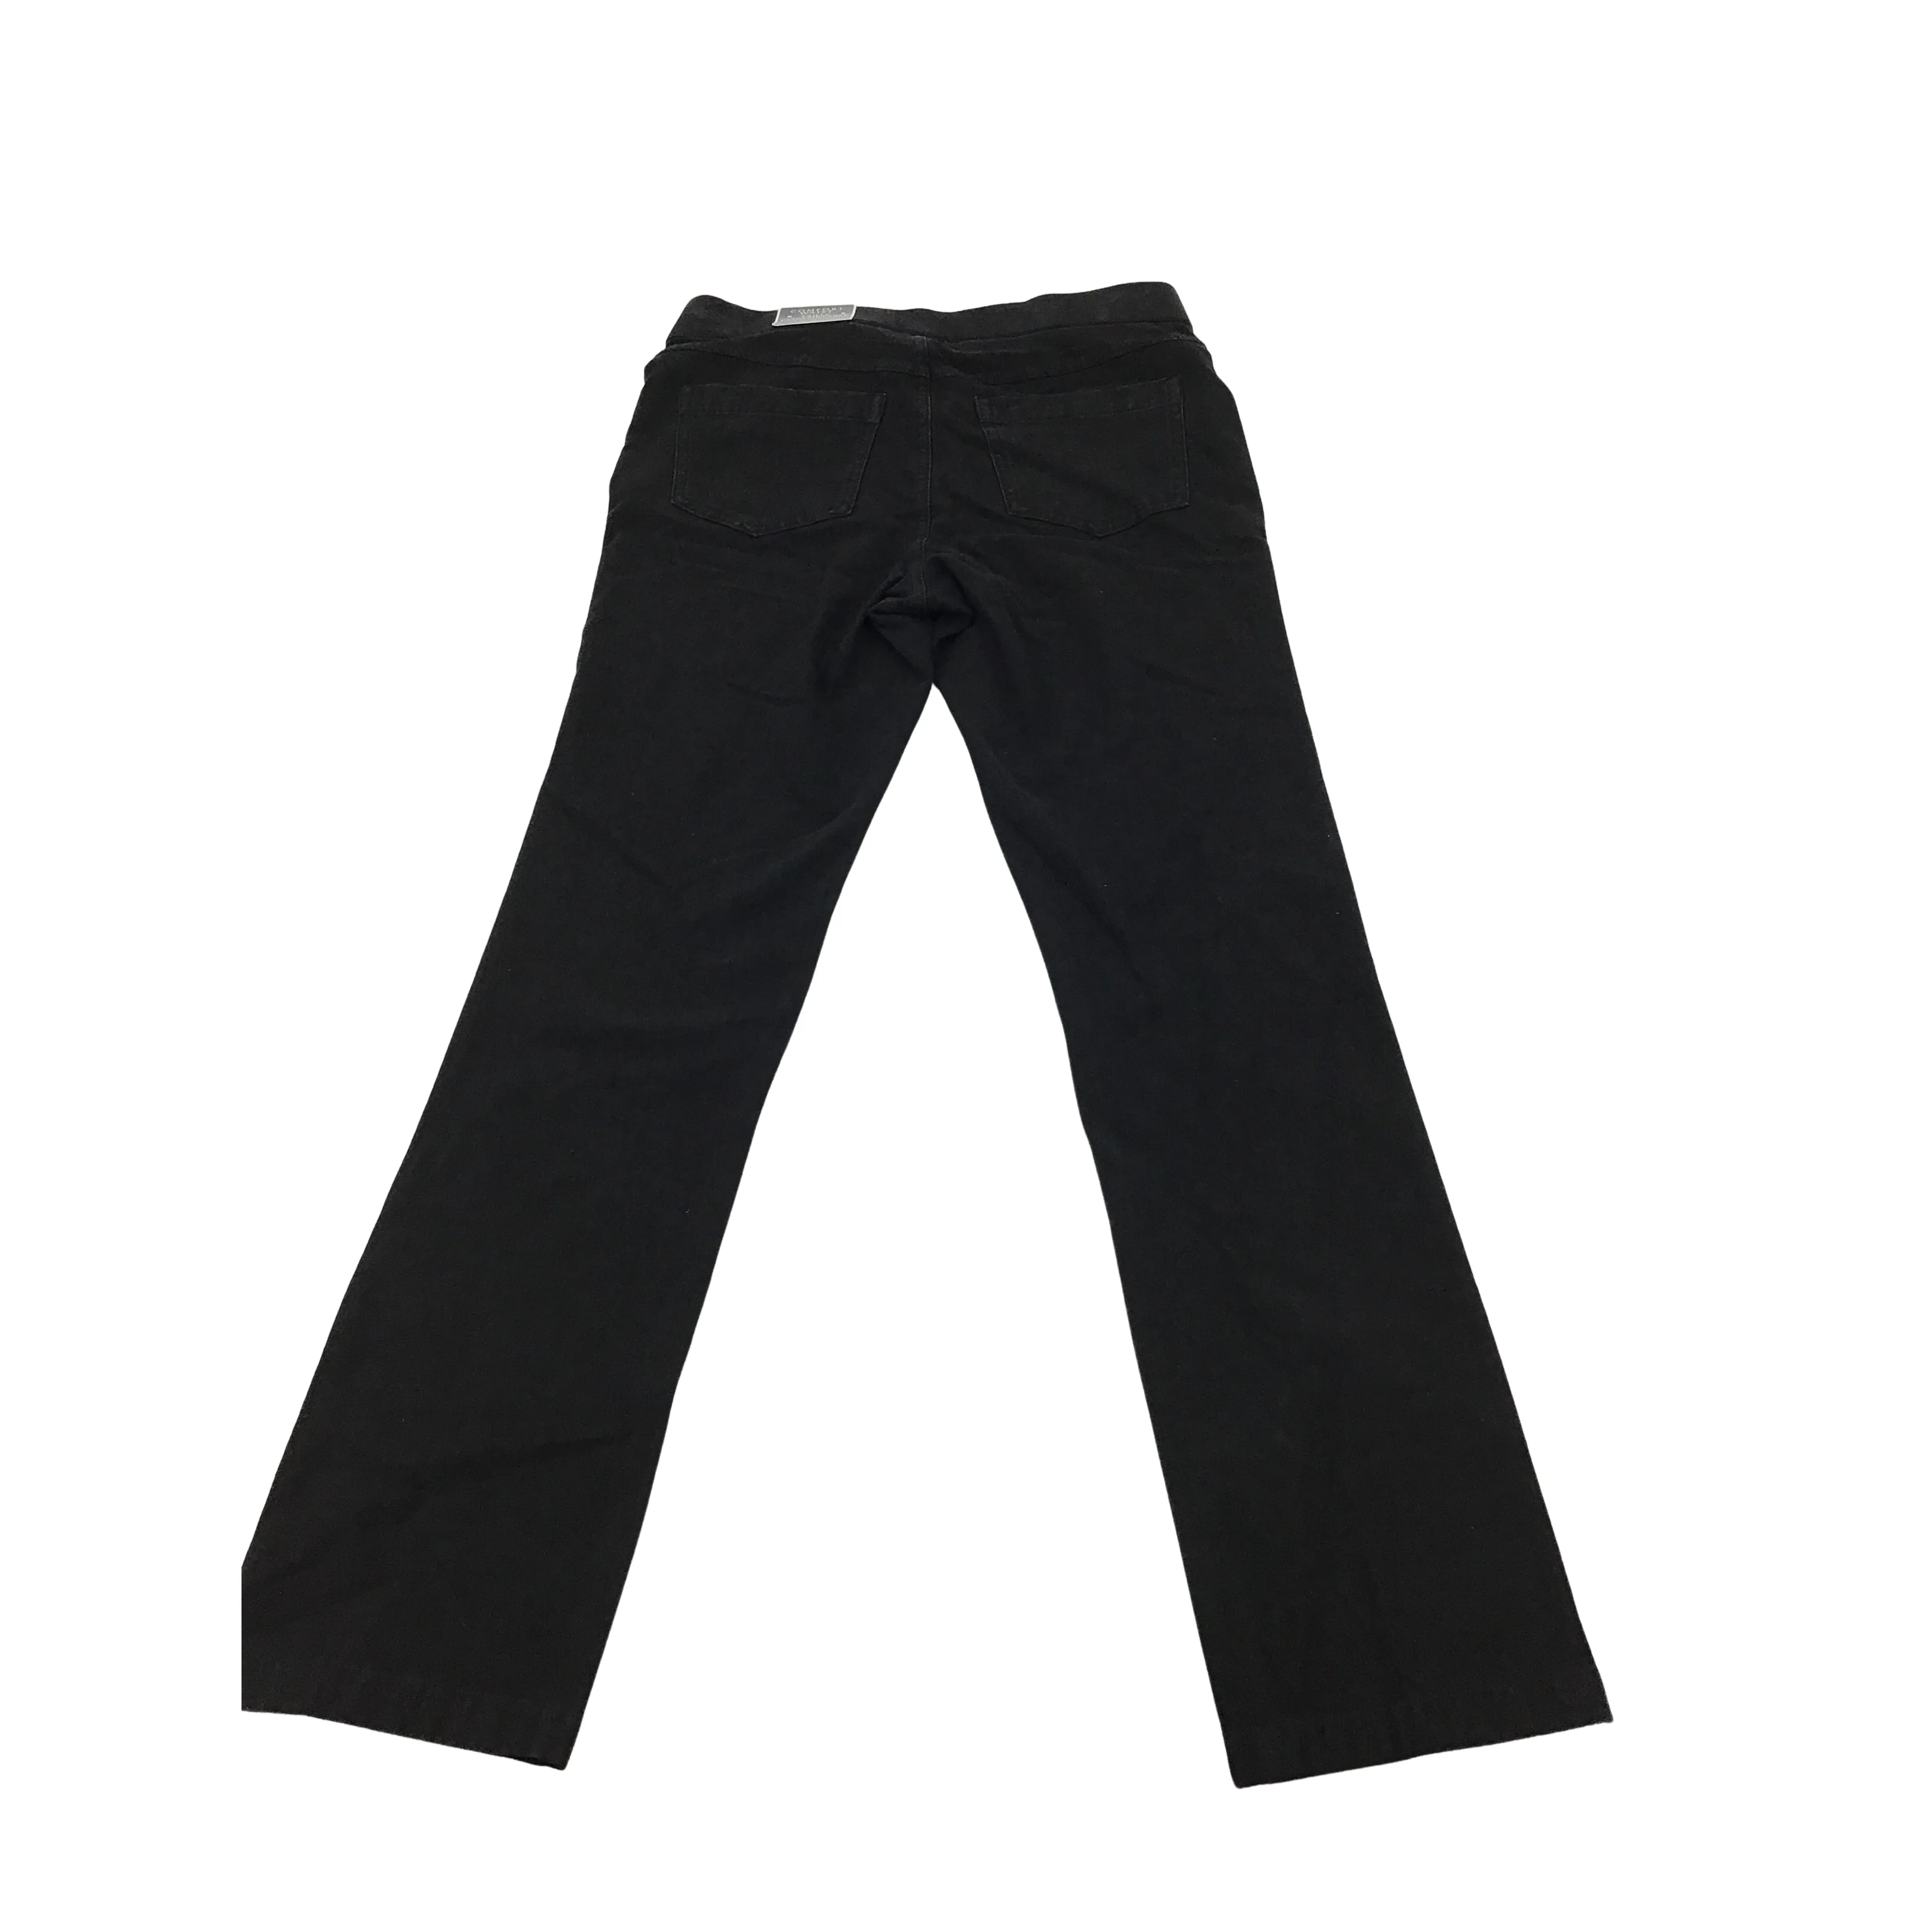 Karen Scott Women's Pants:Black/Size Small Petite